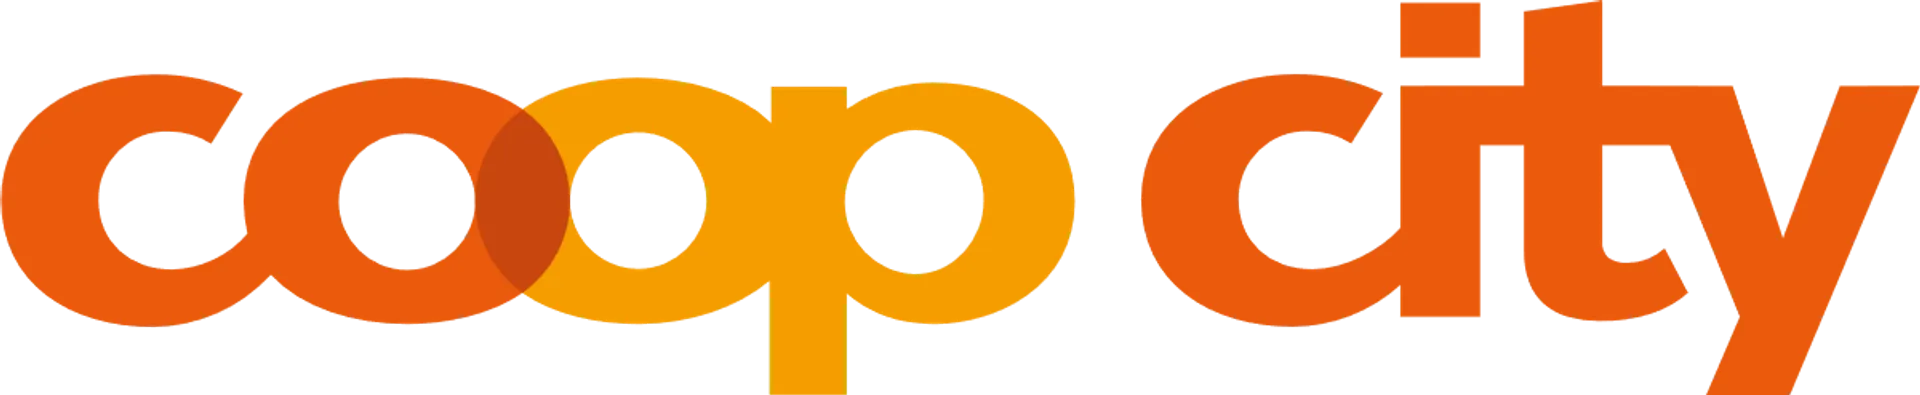 COOP CITY logo